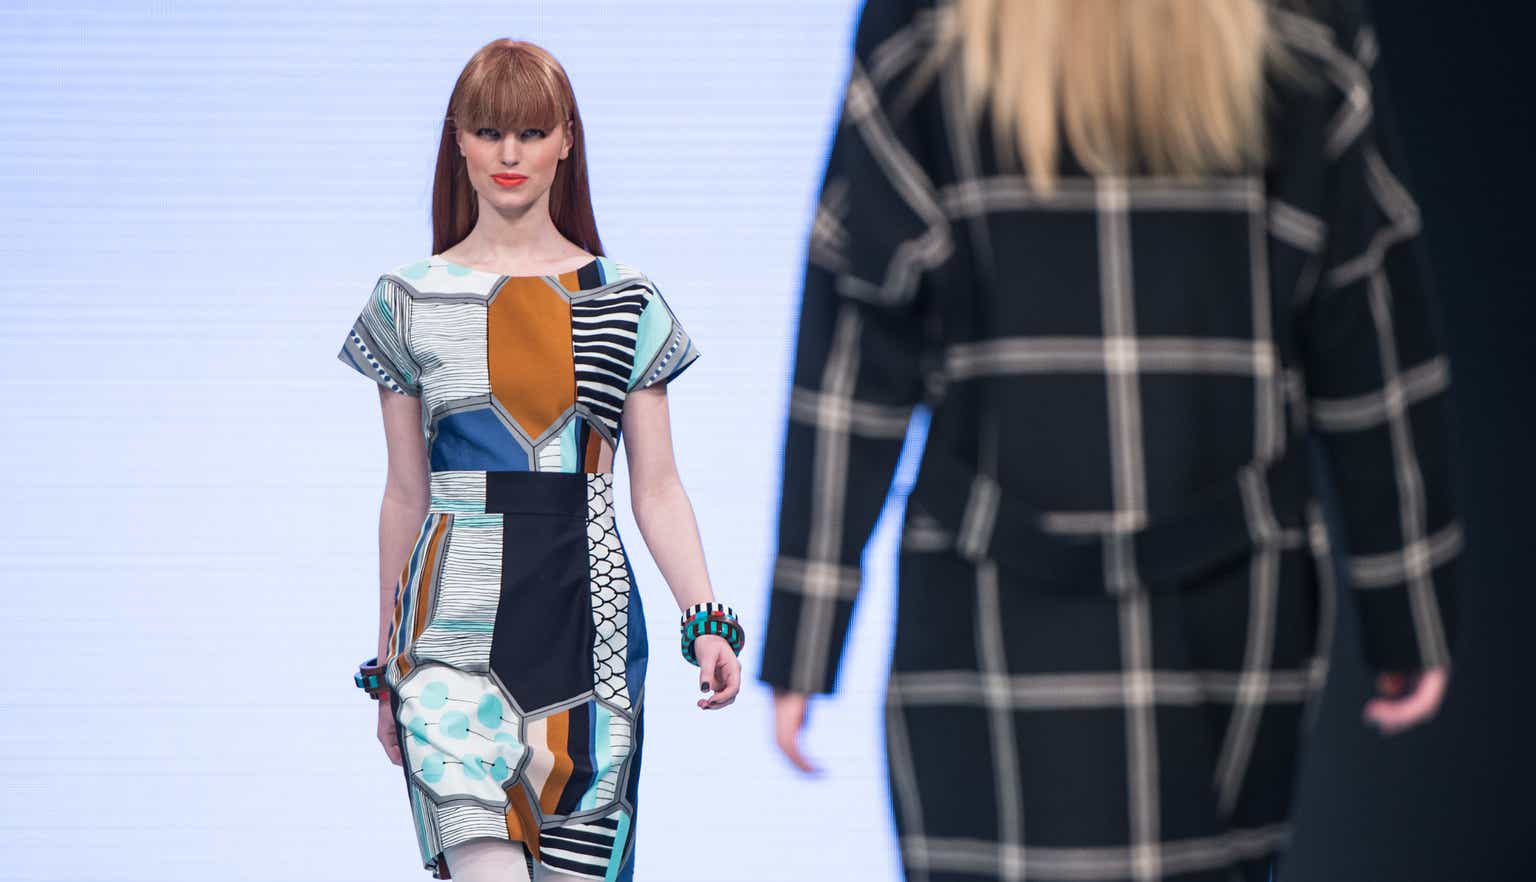 Marimekko: Steady Fashion Industry Performer, Promising Growth Prospects |  MKKOF | Seeking Alpha